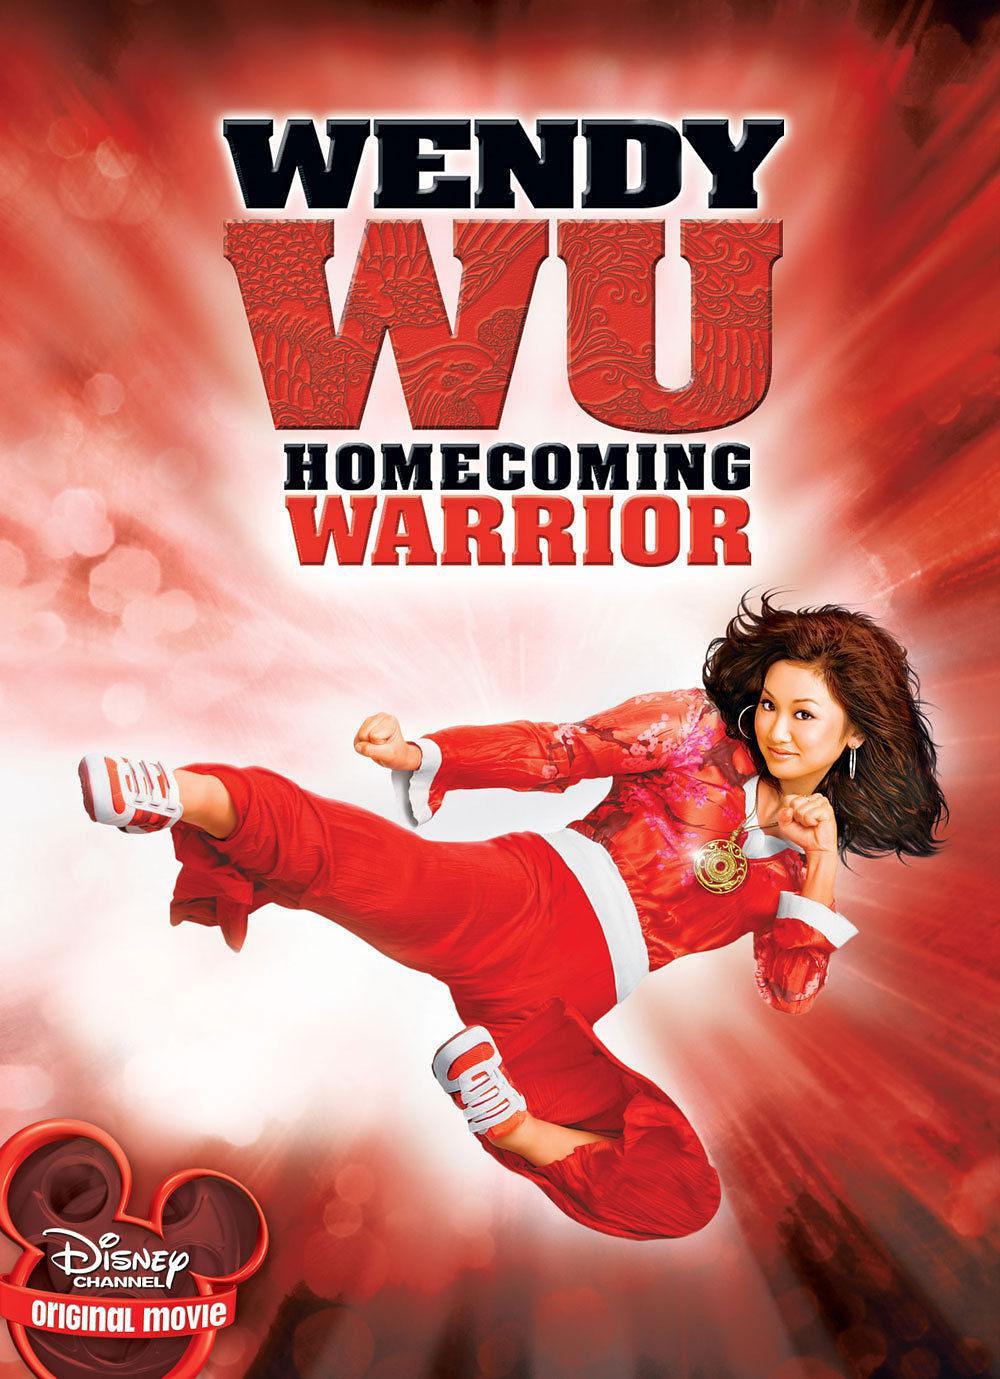 舞会战士 Wendy.Wu.Homecoming.Warrior.2006.1080p.AMZN.WEBRip.DDP5.1.x264-TrollHD 9.24GB-1.png